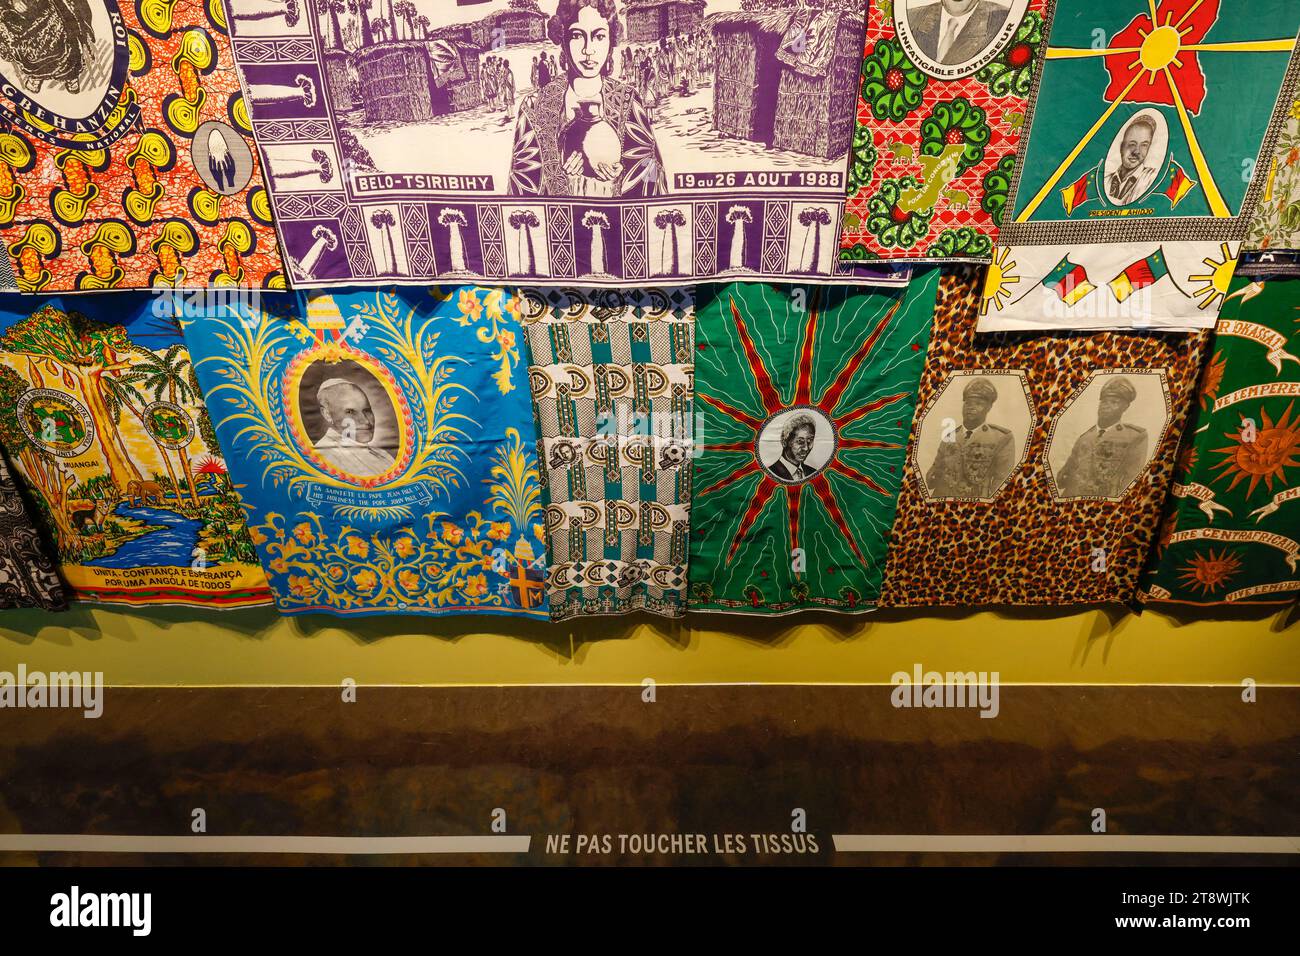 FANCY:COMMEMORATIVE CLOTHS IN AFRICA EXHIBITION AT THE QUAI BRANLY MUSEUM PARIS Stock Photo